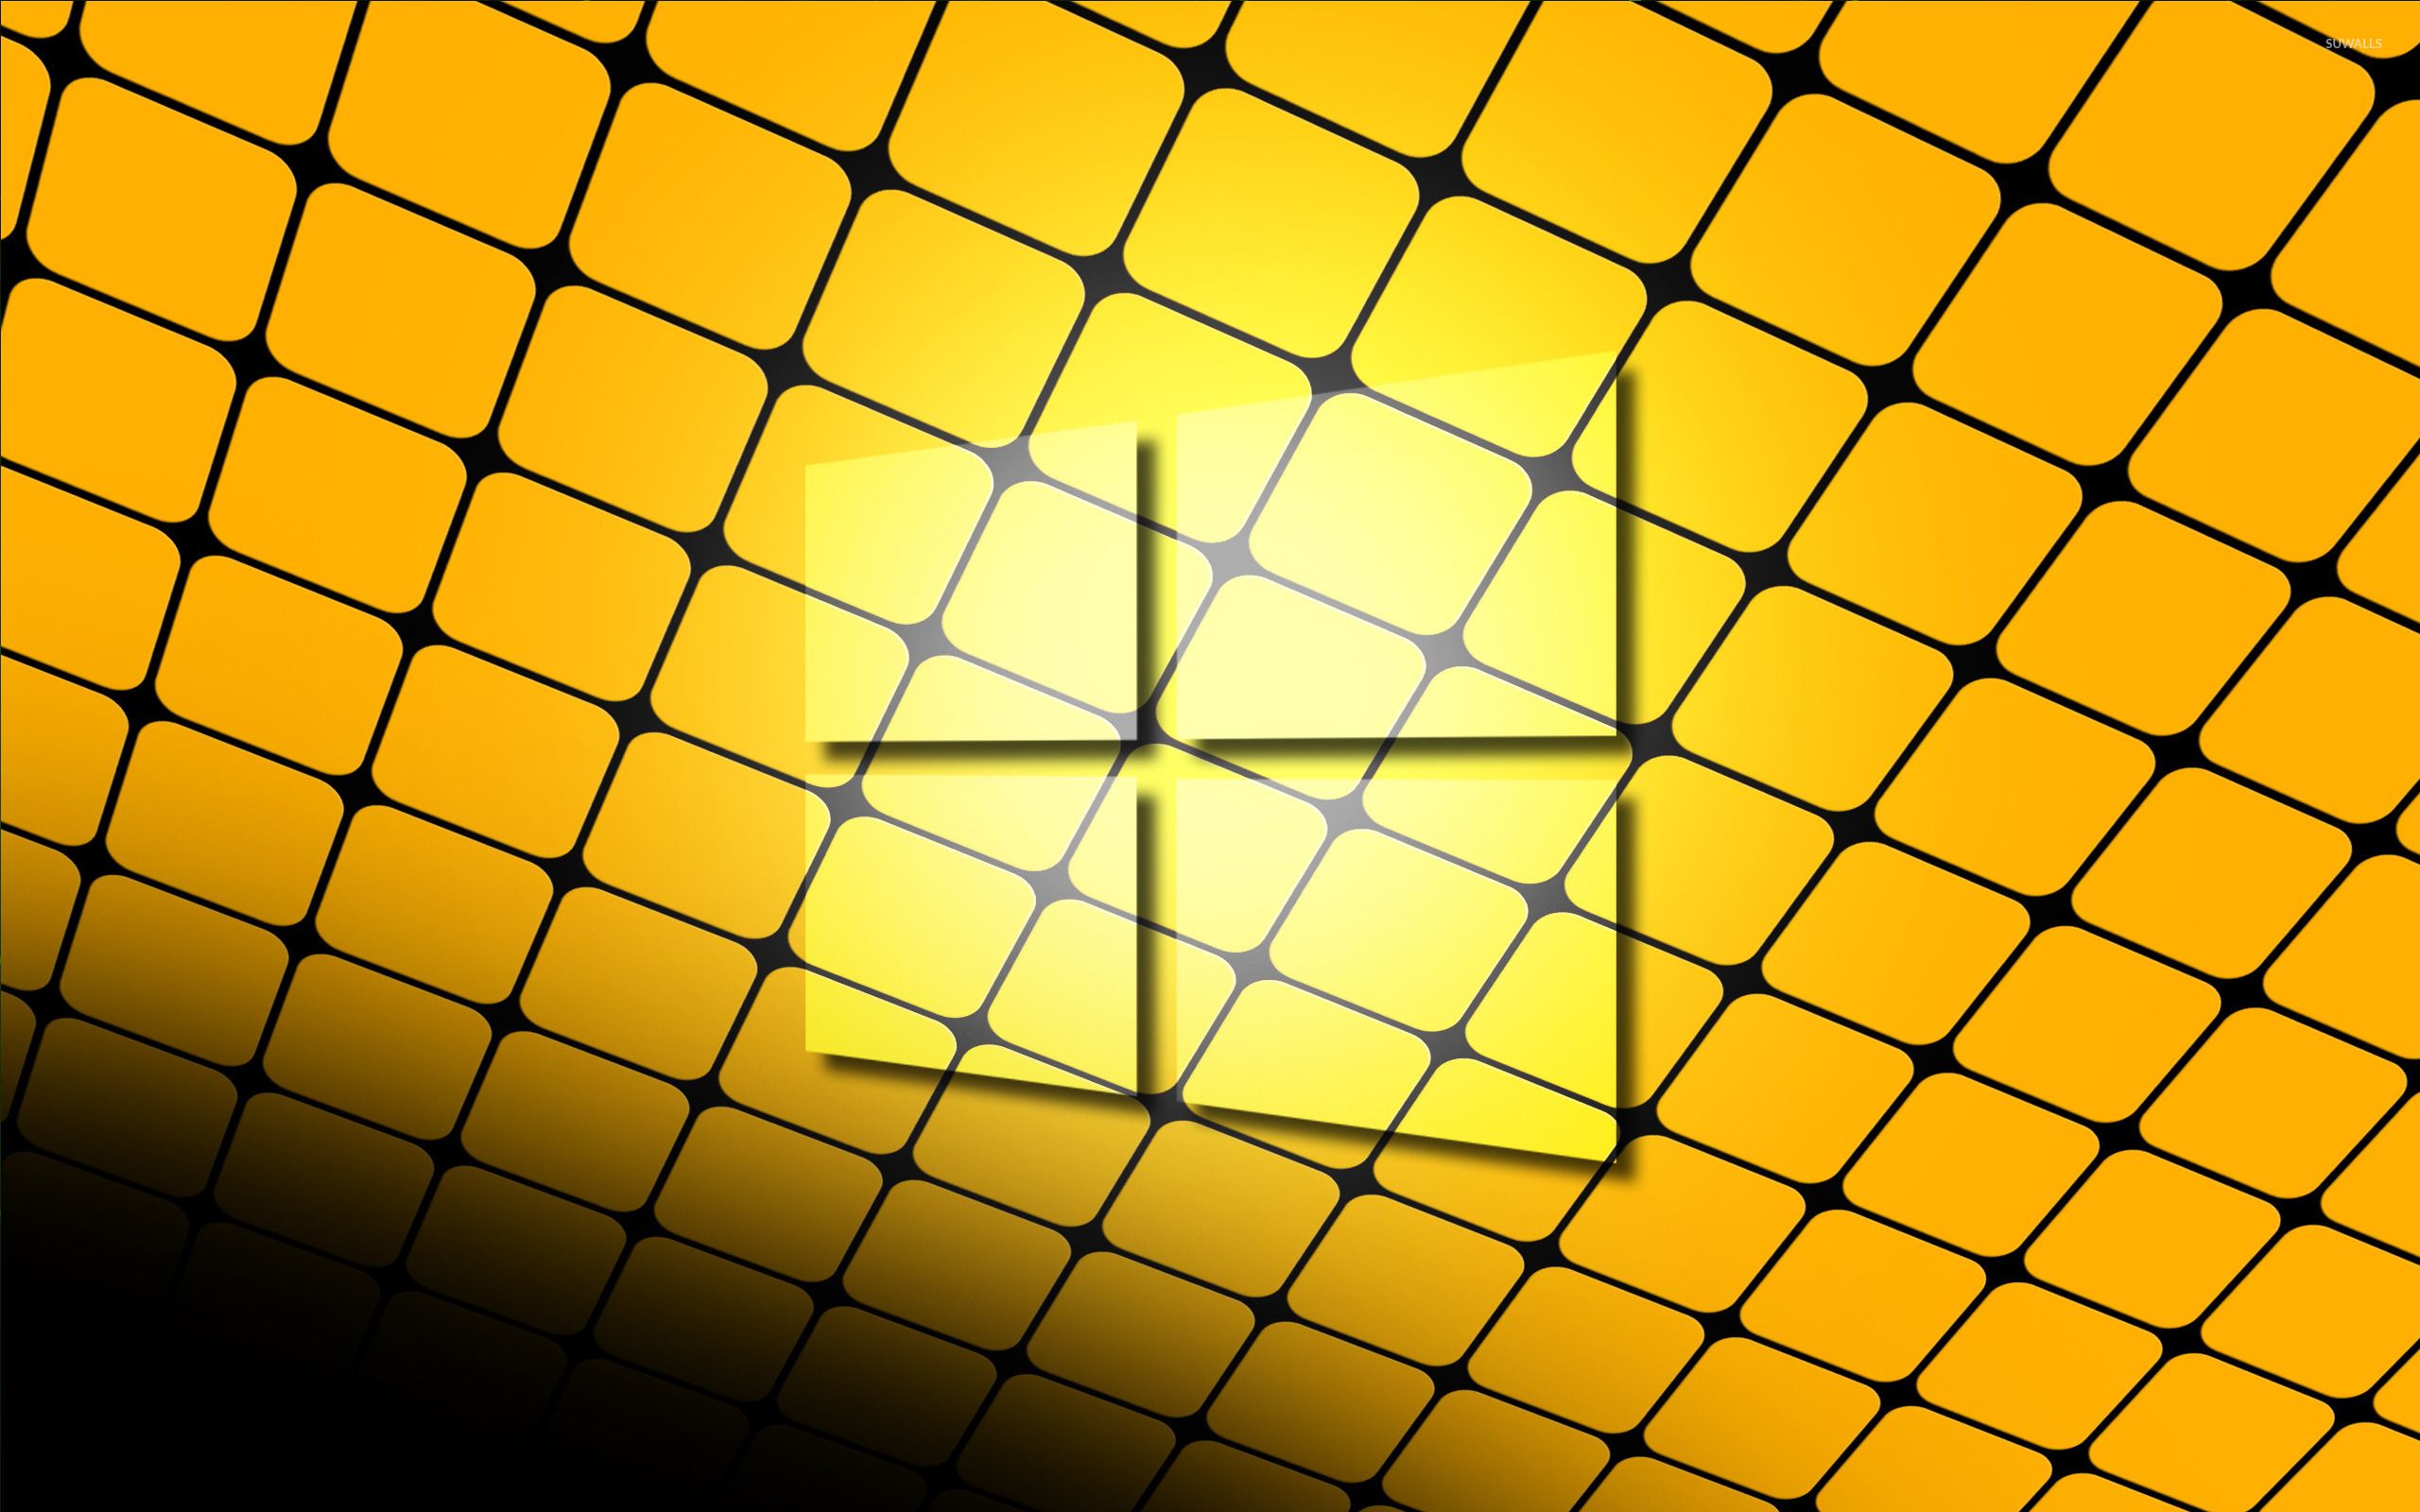 Windows 10 glass logo on a yellow grid wallpaper wallpaper